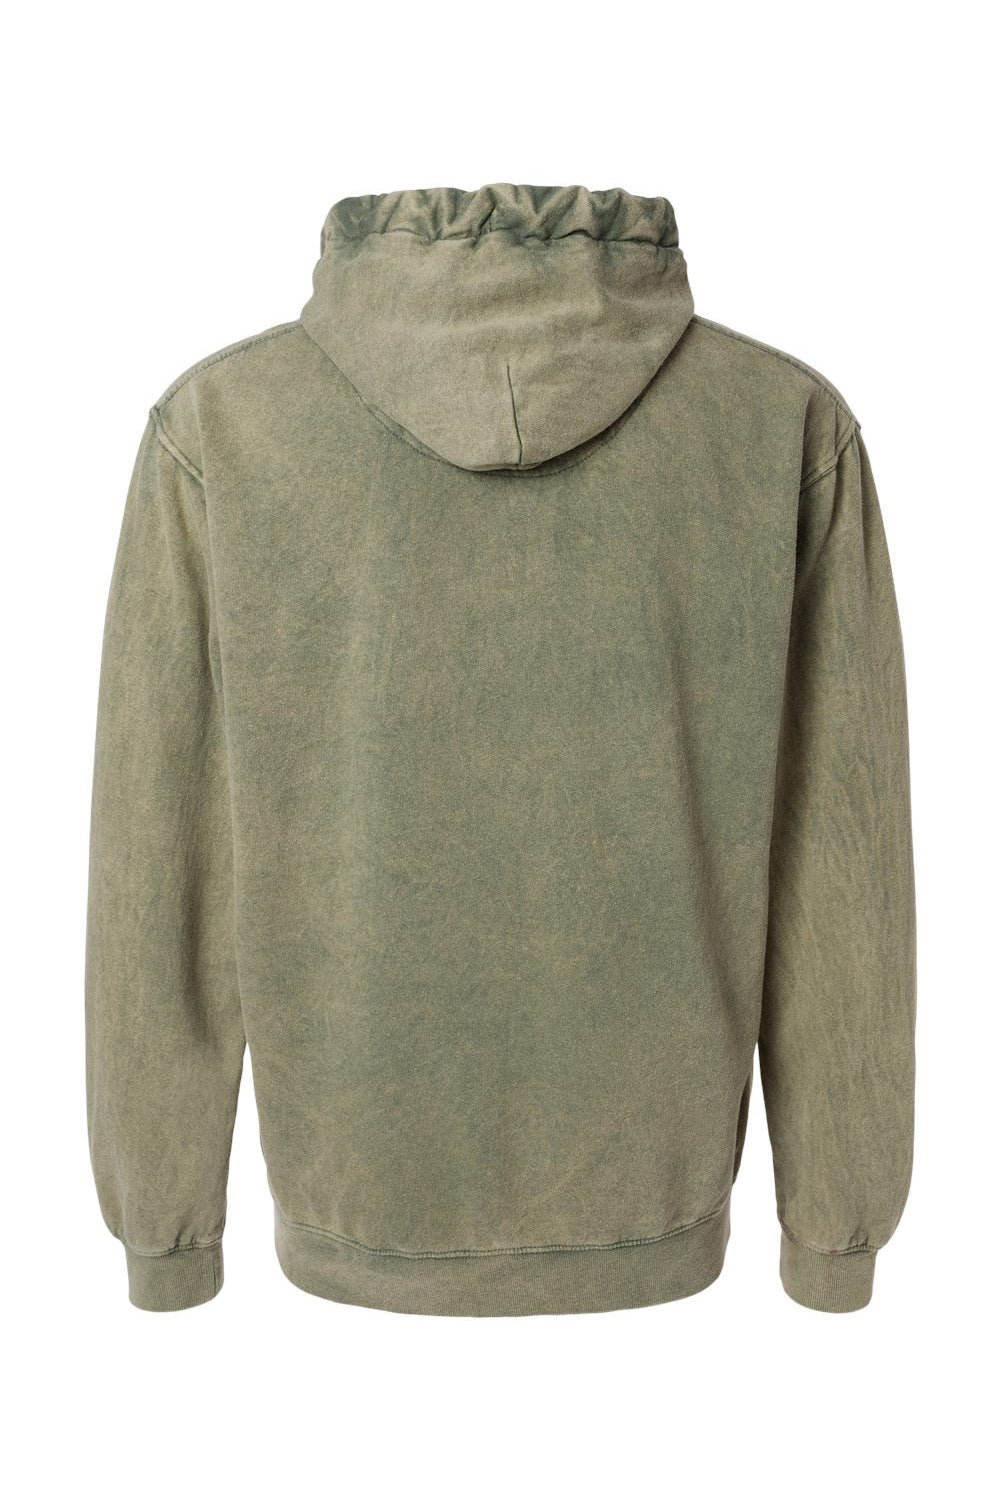 Dyenomite 854MW Mens Premium Fleece Mineral Wash Hooded Sweatshirt Hoodie Kale Green Flat Back